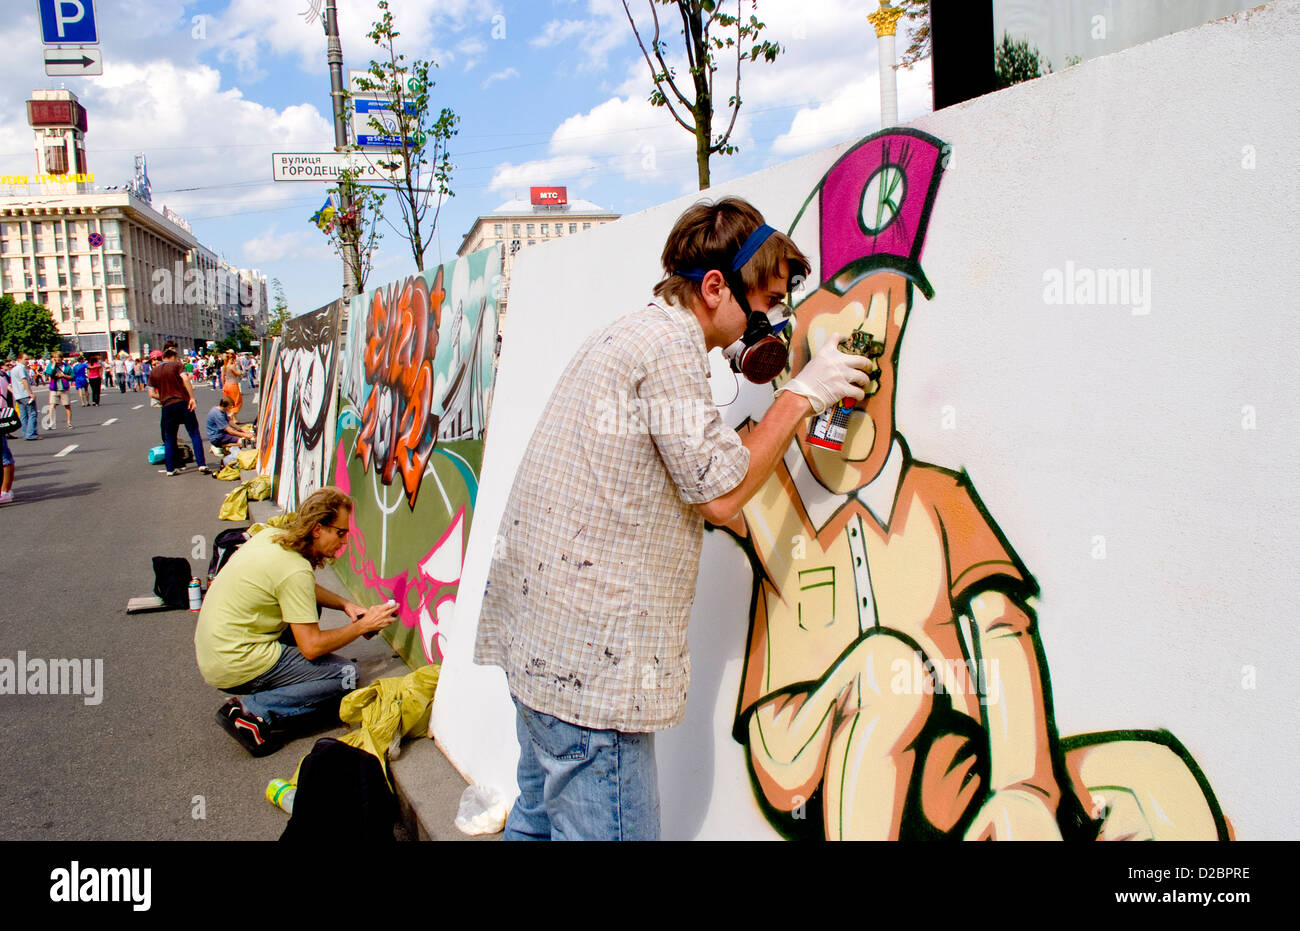 Artists Spray Painting Artwork At Street Festival In Kiev, Ukraine. Stock Photo